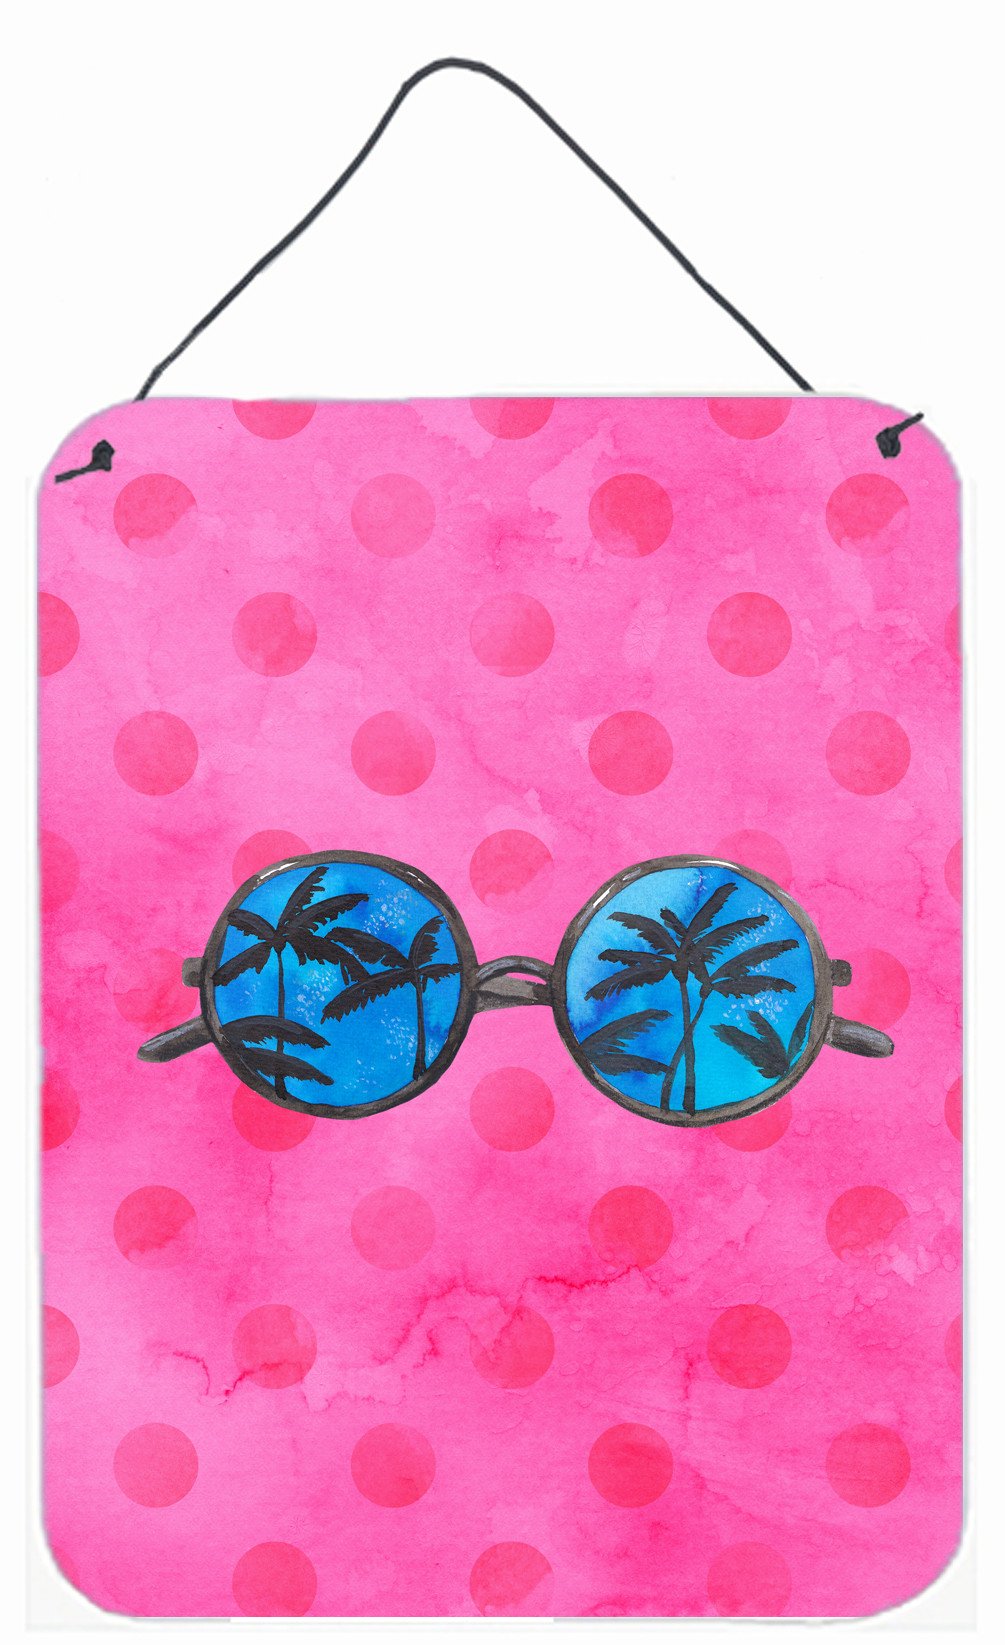 Sunglasses Pink Polkadot Wall or Door Hanging Prints BB8179DS1216 by Caroline's Treasures